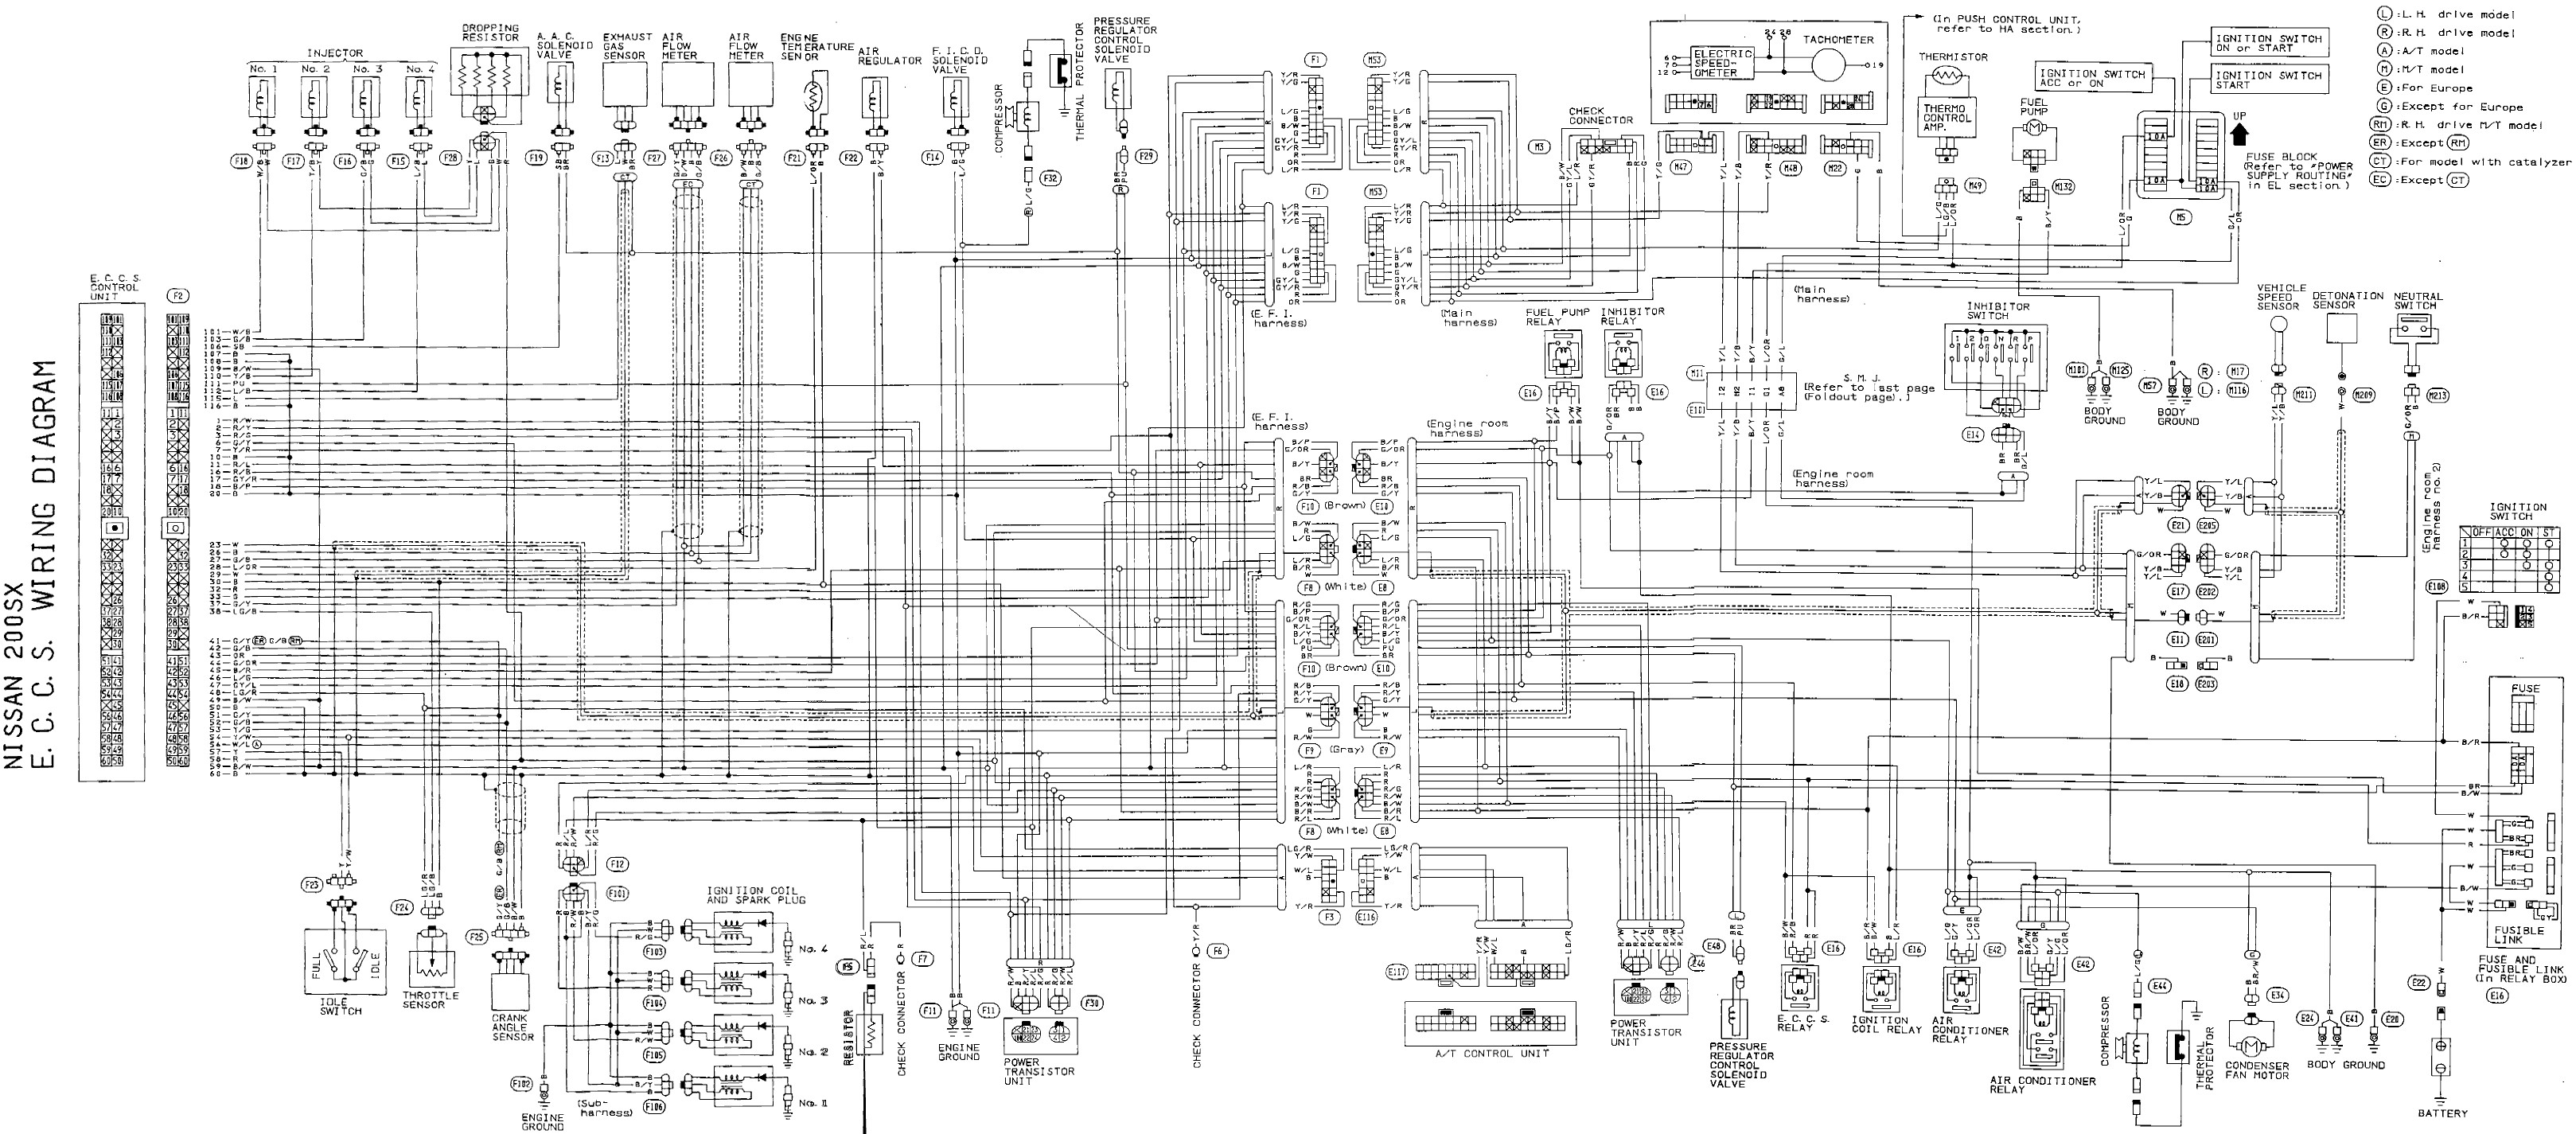 Engine Schematic Diagram 200sx Engine Wiring Harness Get Free Image About Wiring Diagram Of Engine Schematic Diagram